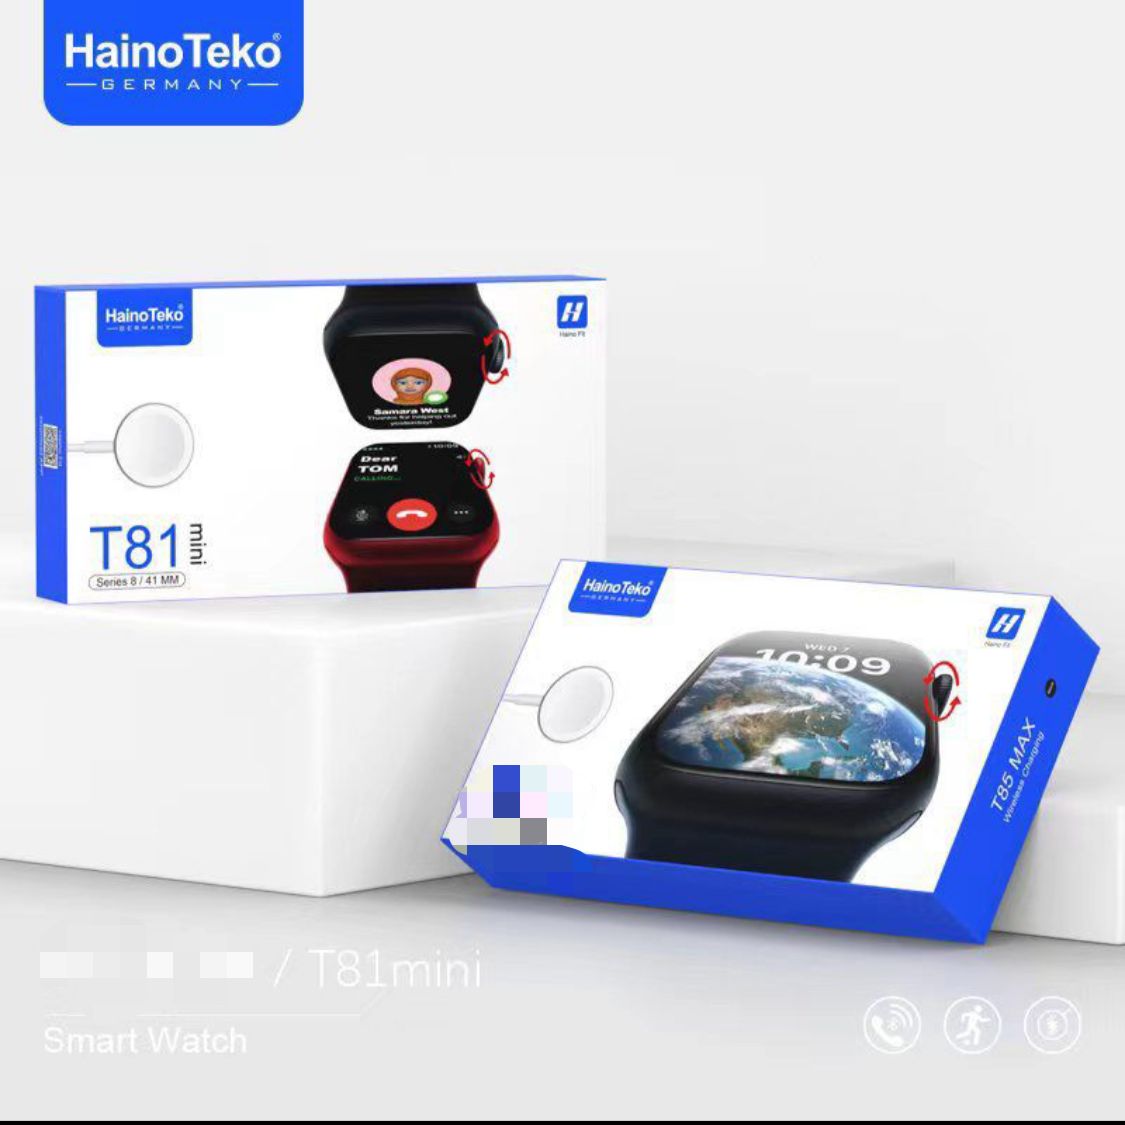 Haino Teko Germany T81 mini, 44mm Smart Watch